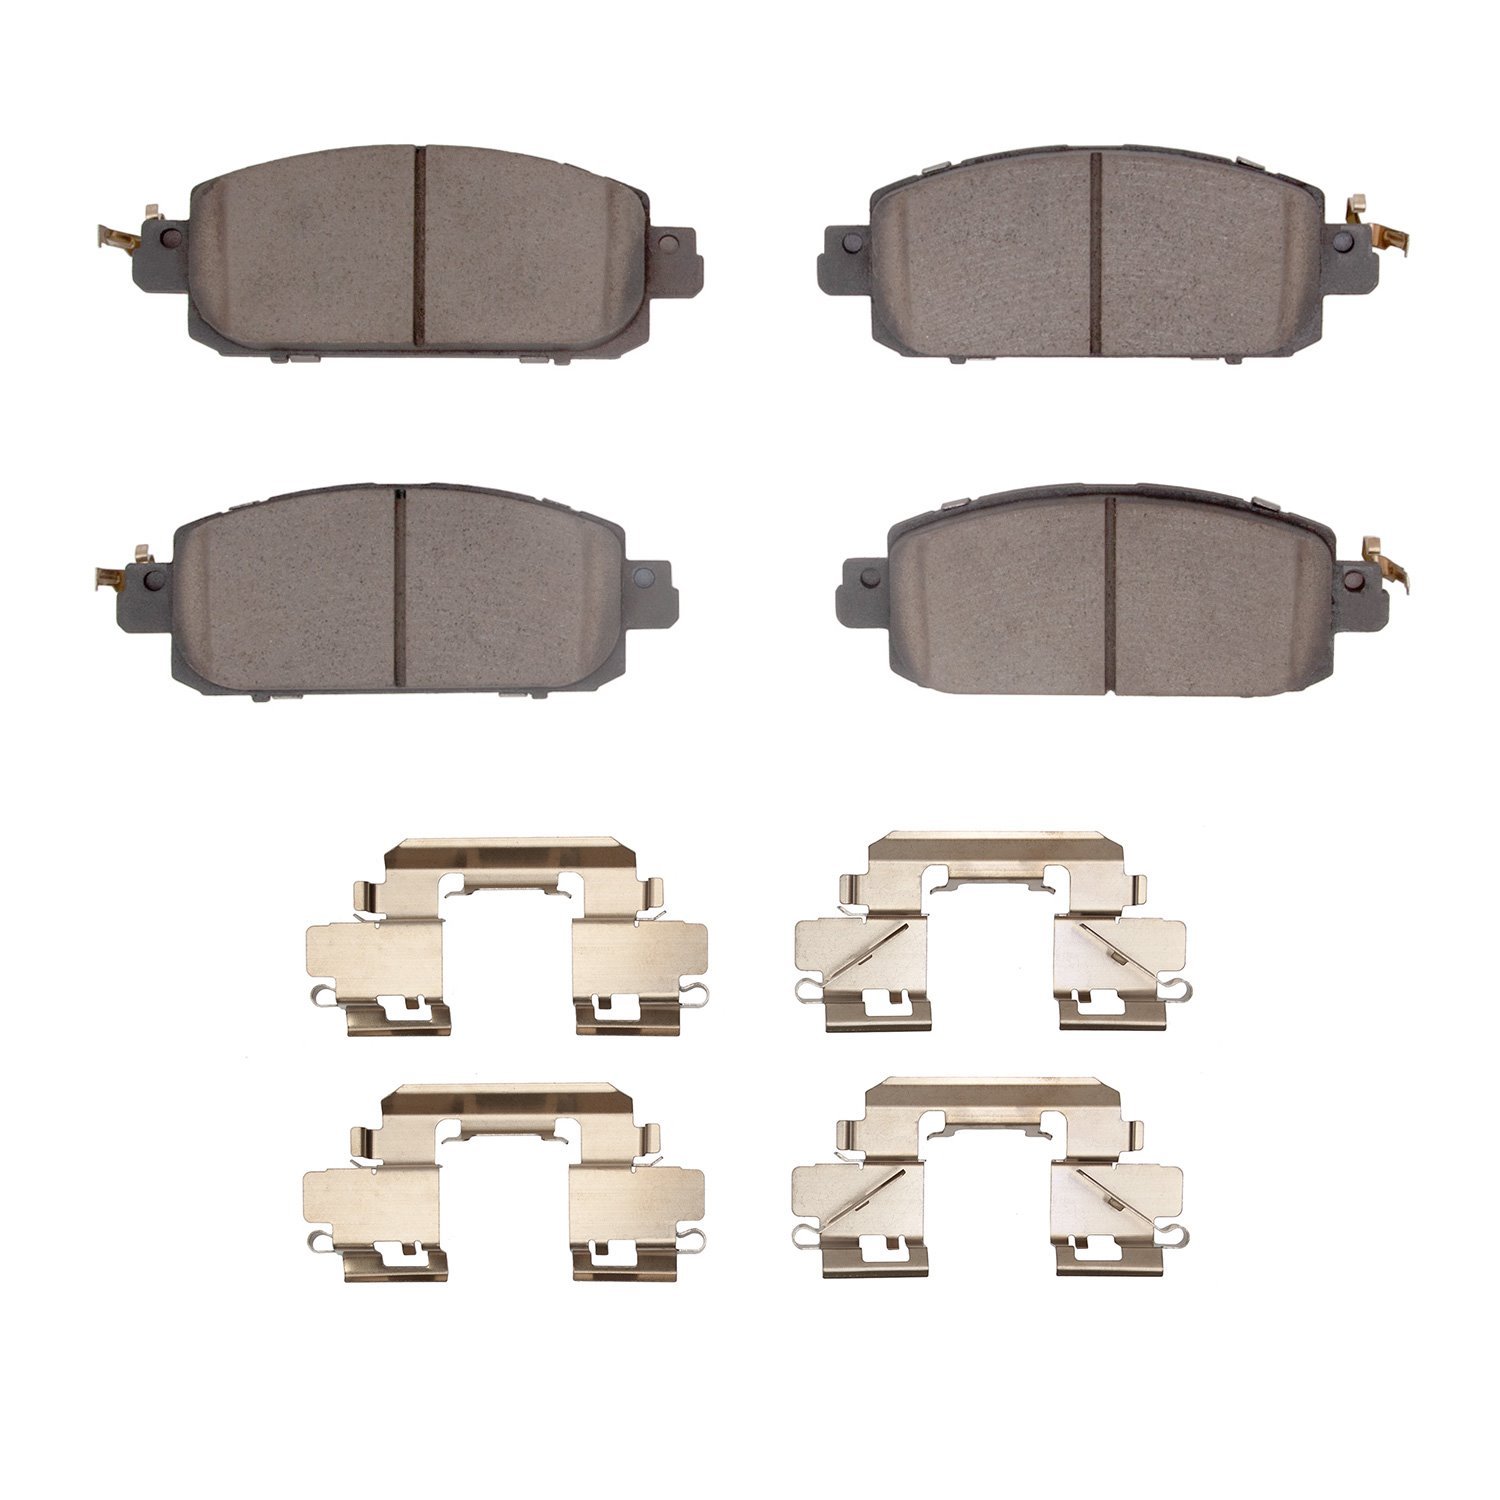 1310-2310-01 3000-Series Ceramic Brake Pads & Hardware Kit, Fits Select Infiniti/Nissan, Position: Front